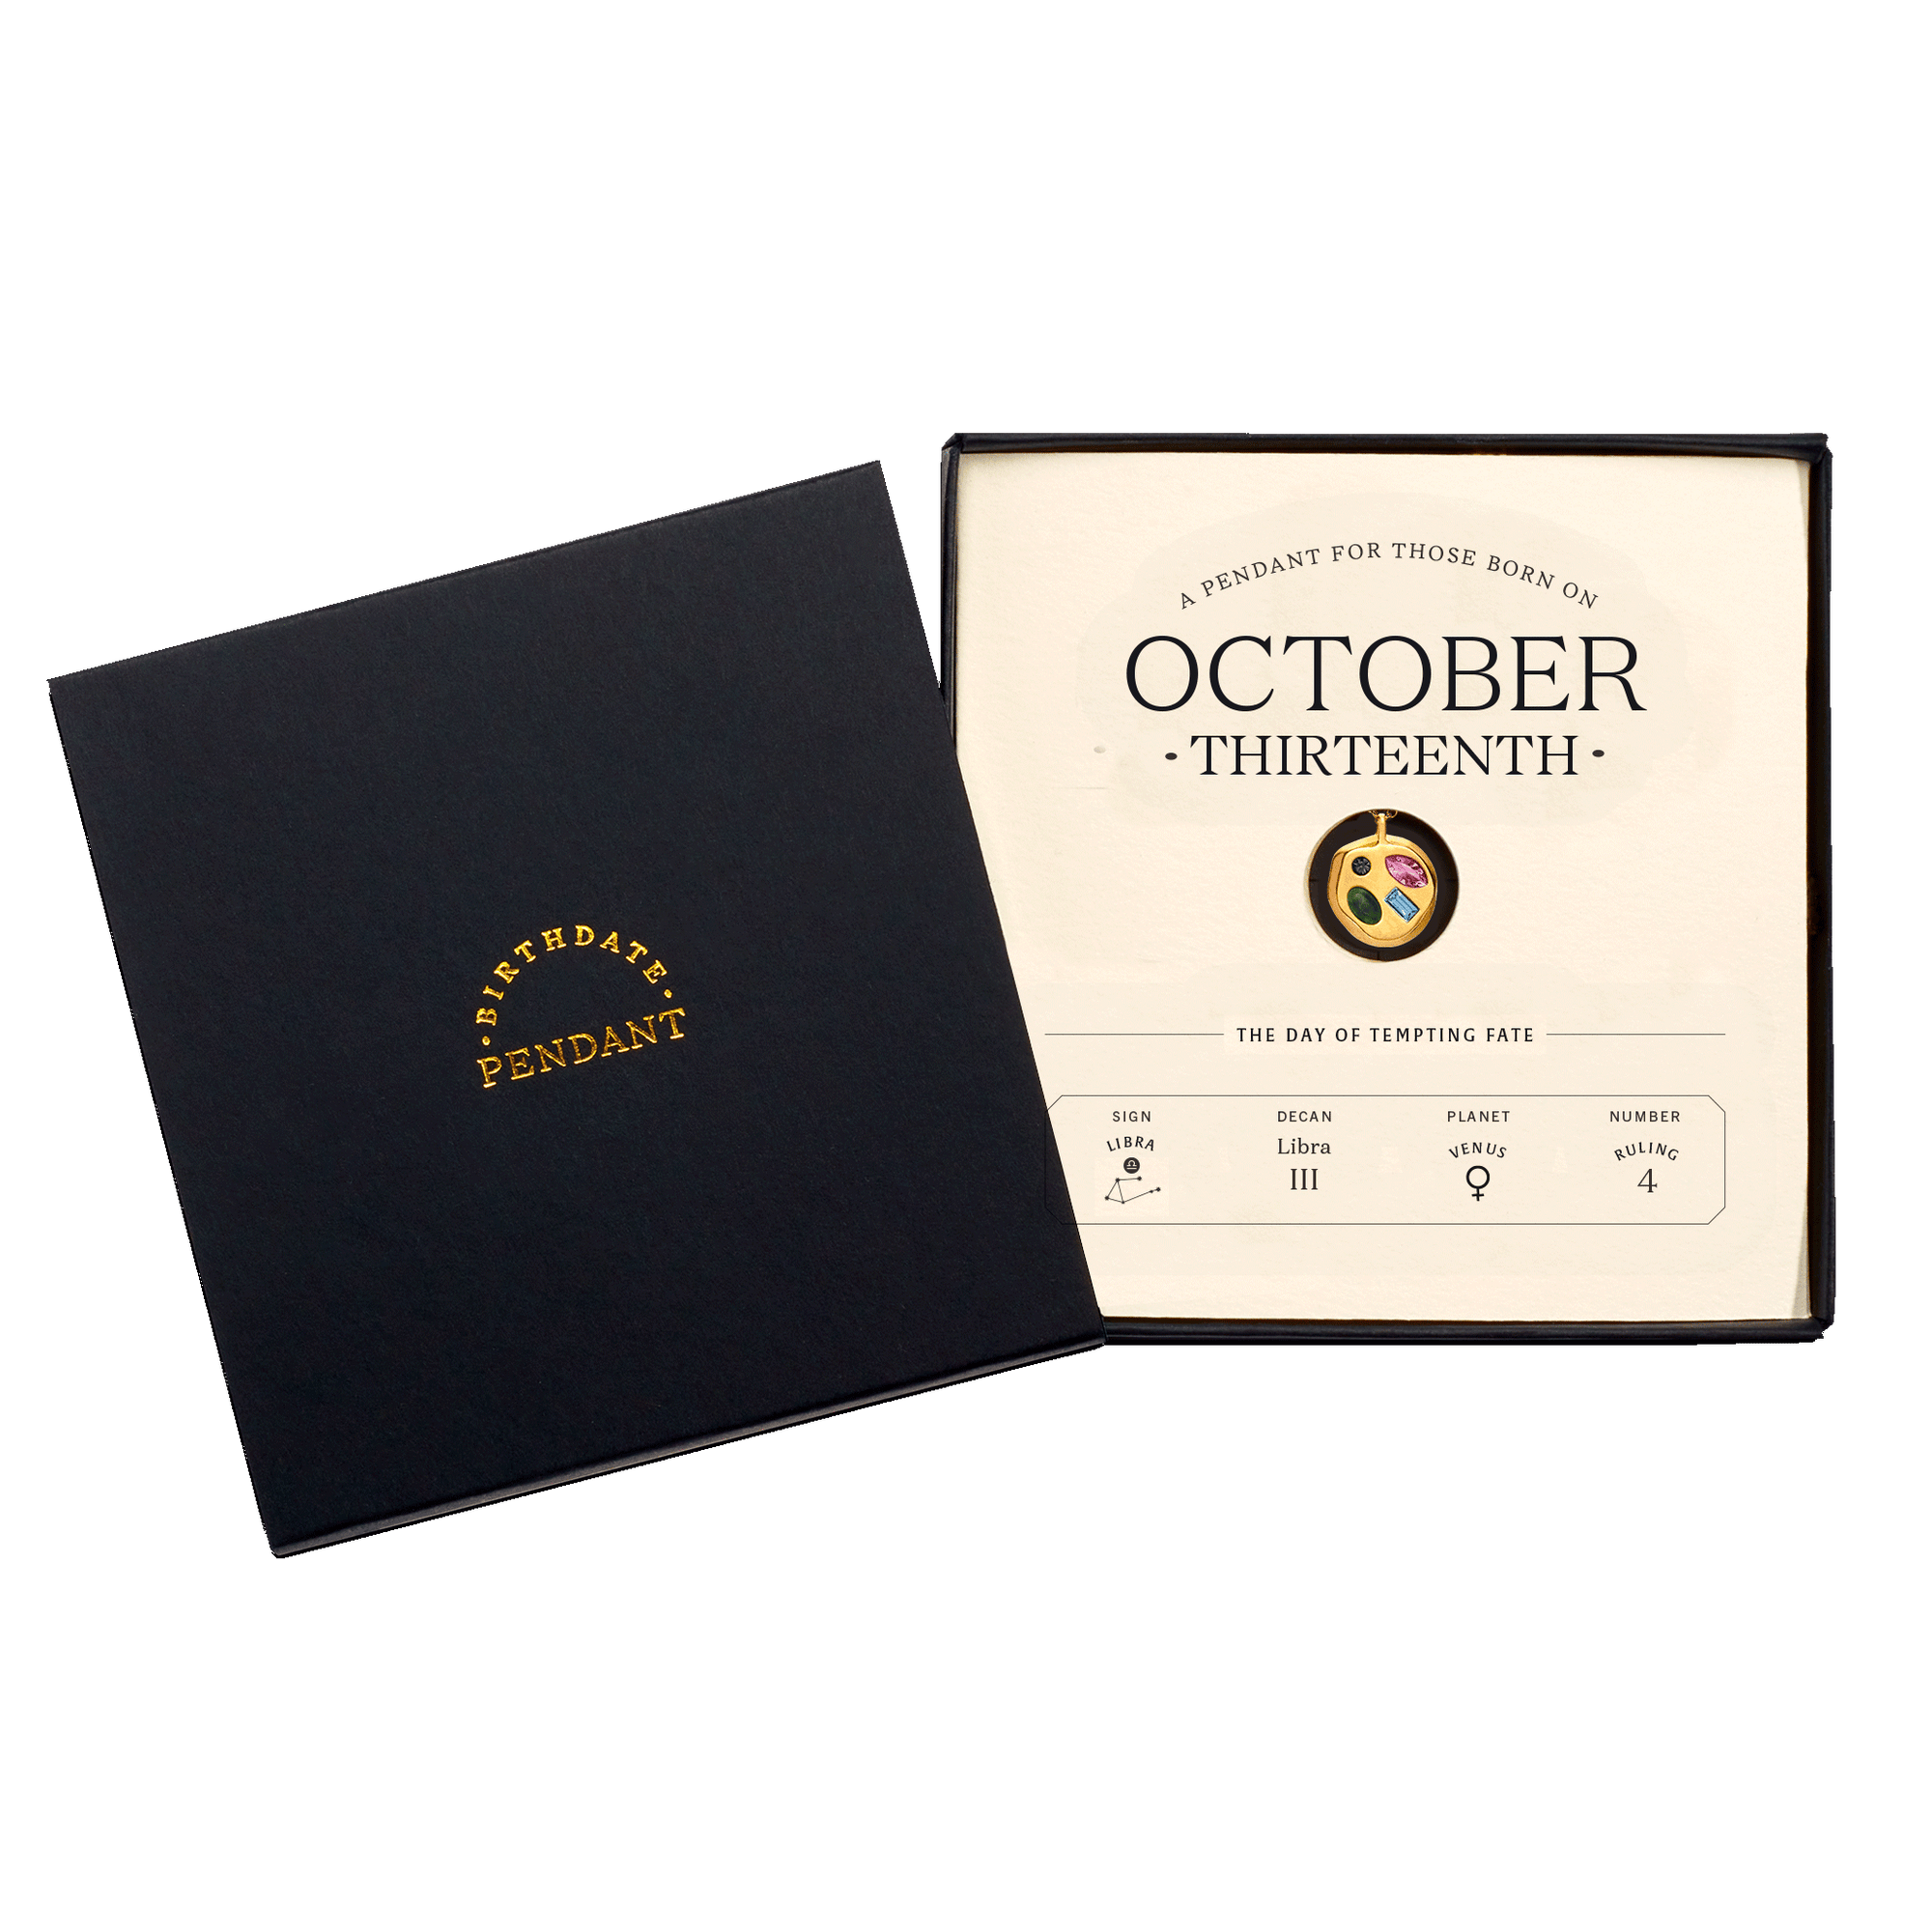 The October Thirteenth Pendant inside its box